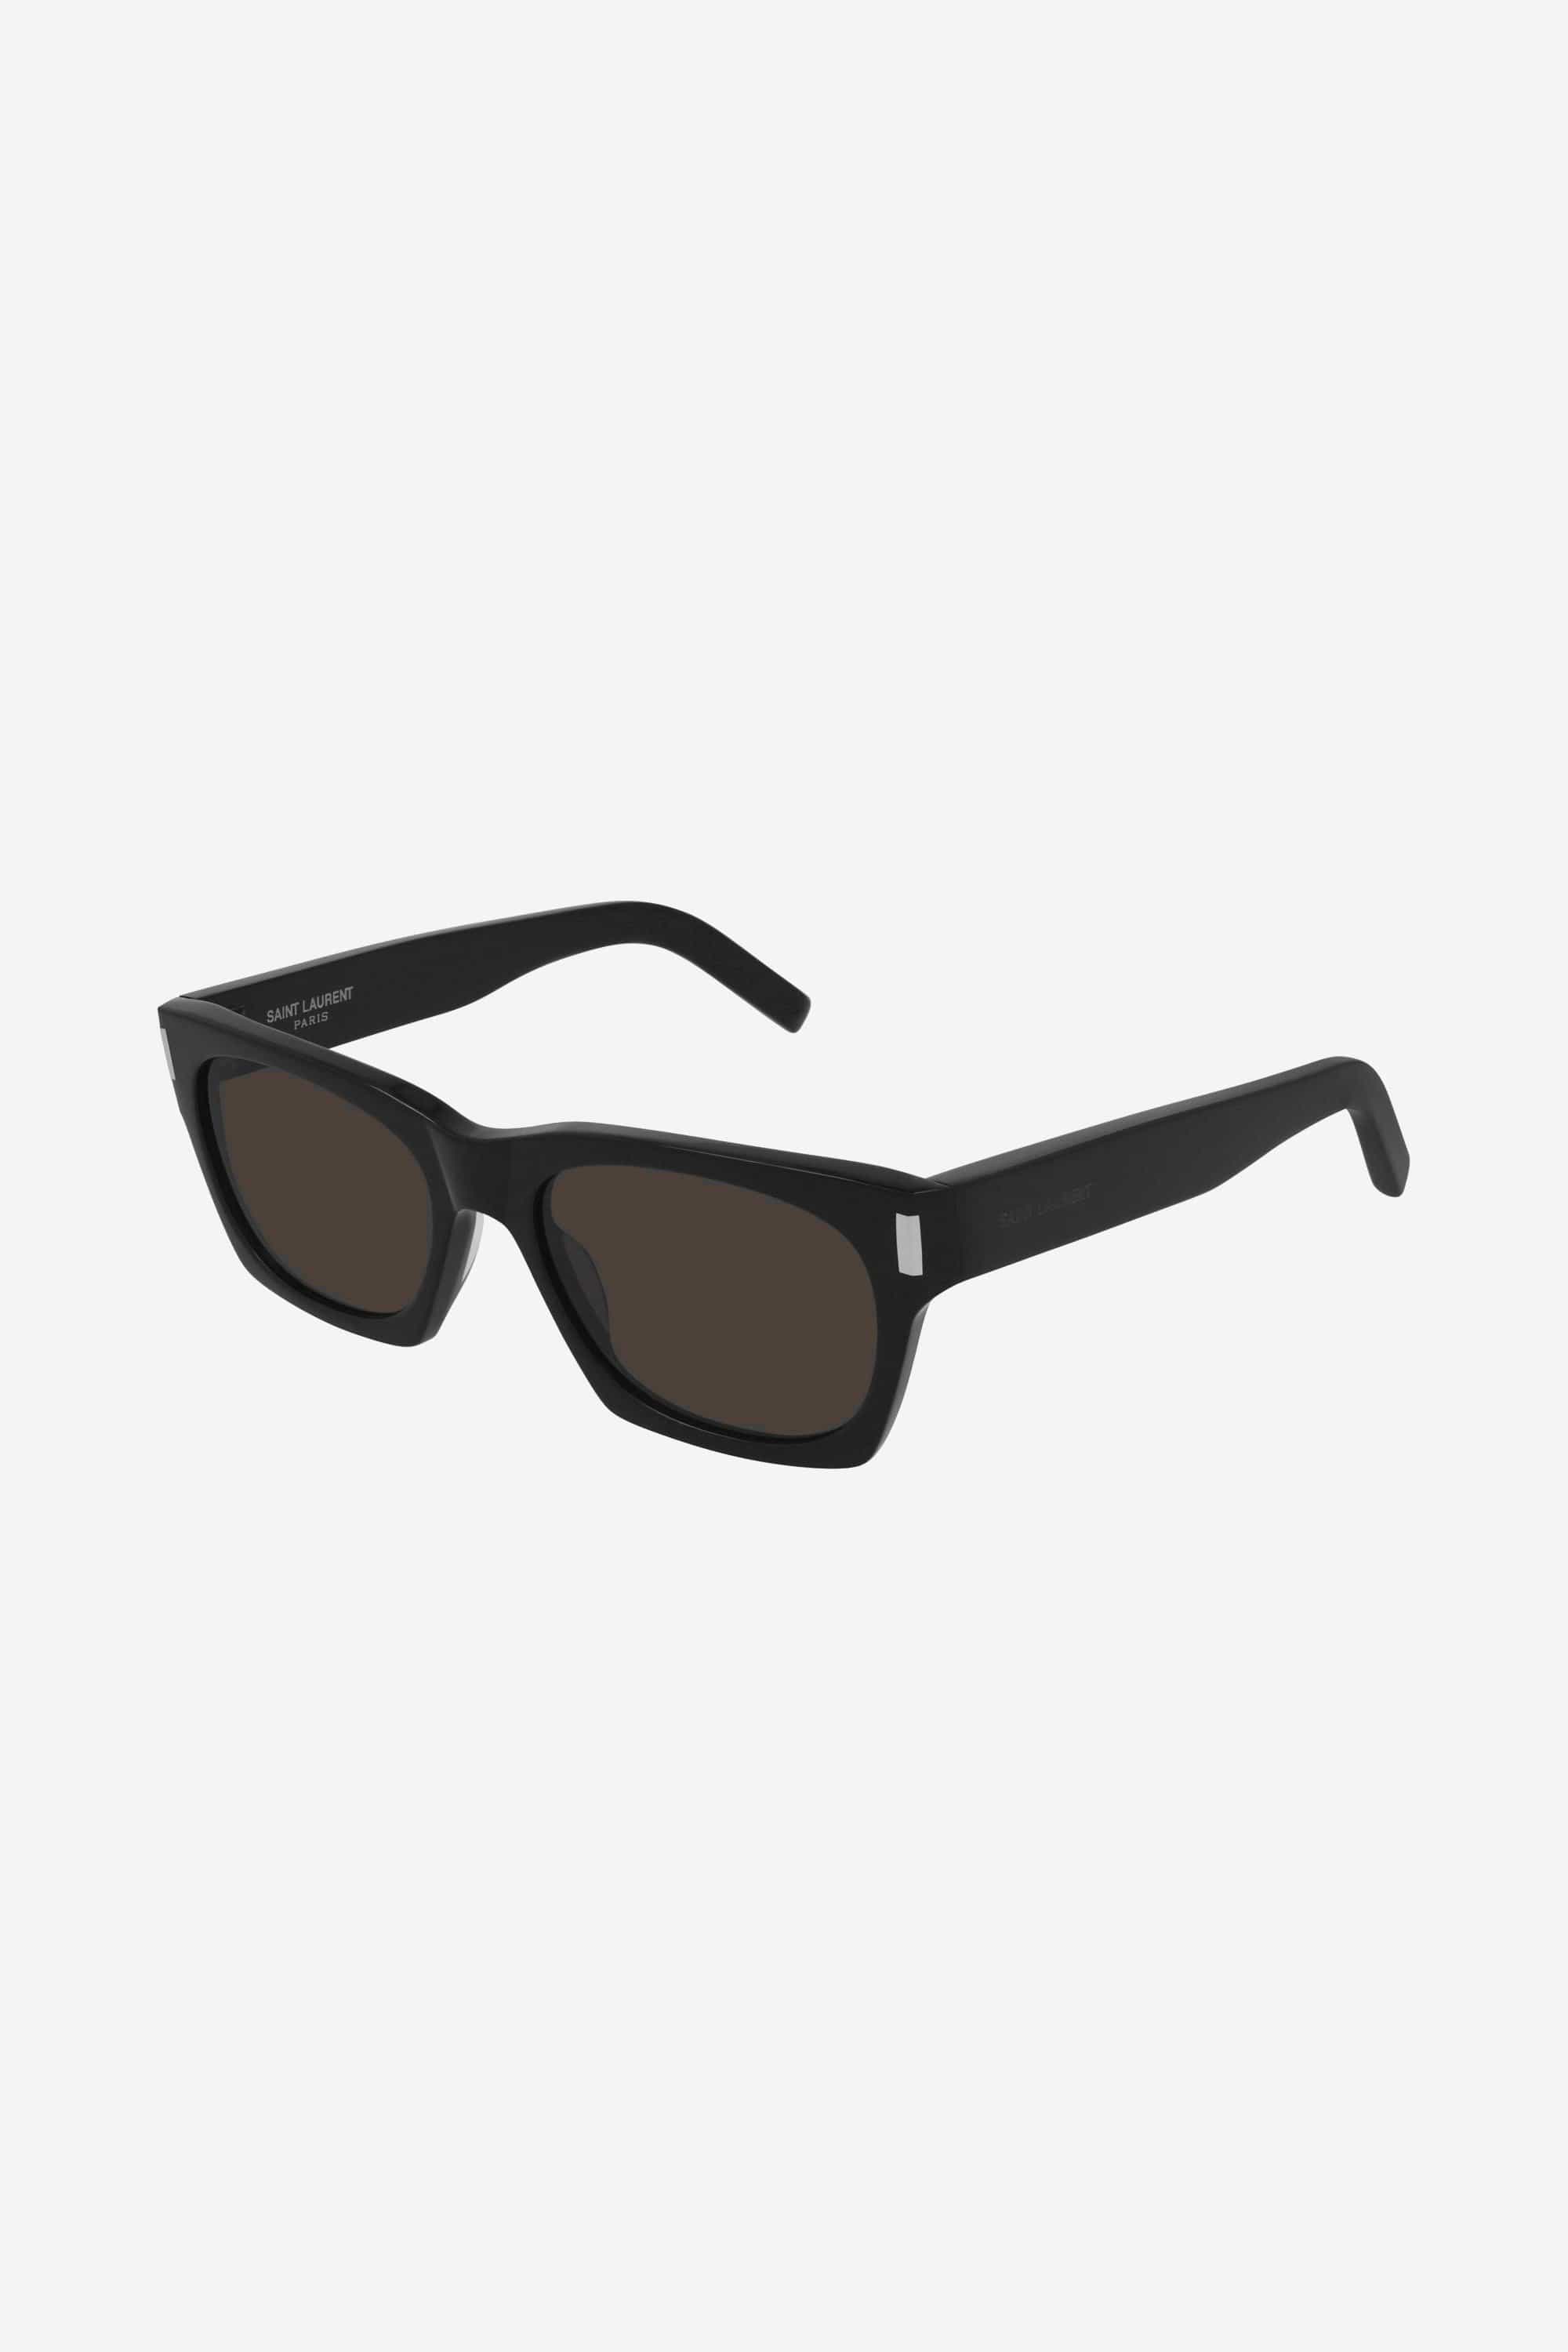 Saint Laurent rectangular sharp black sunglasses - Eyewear Club